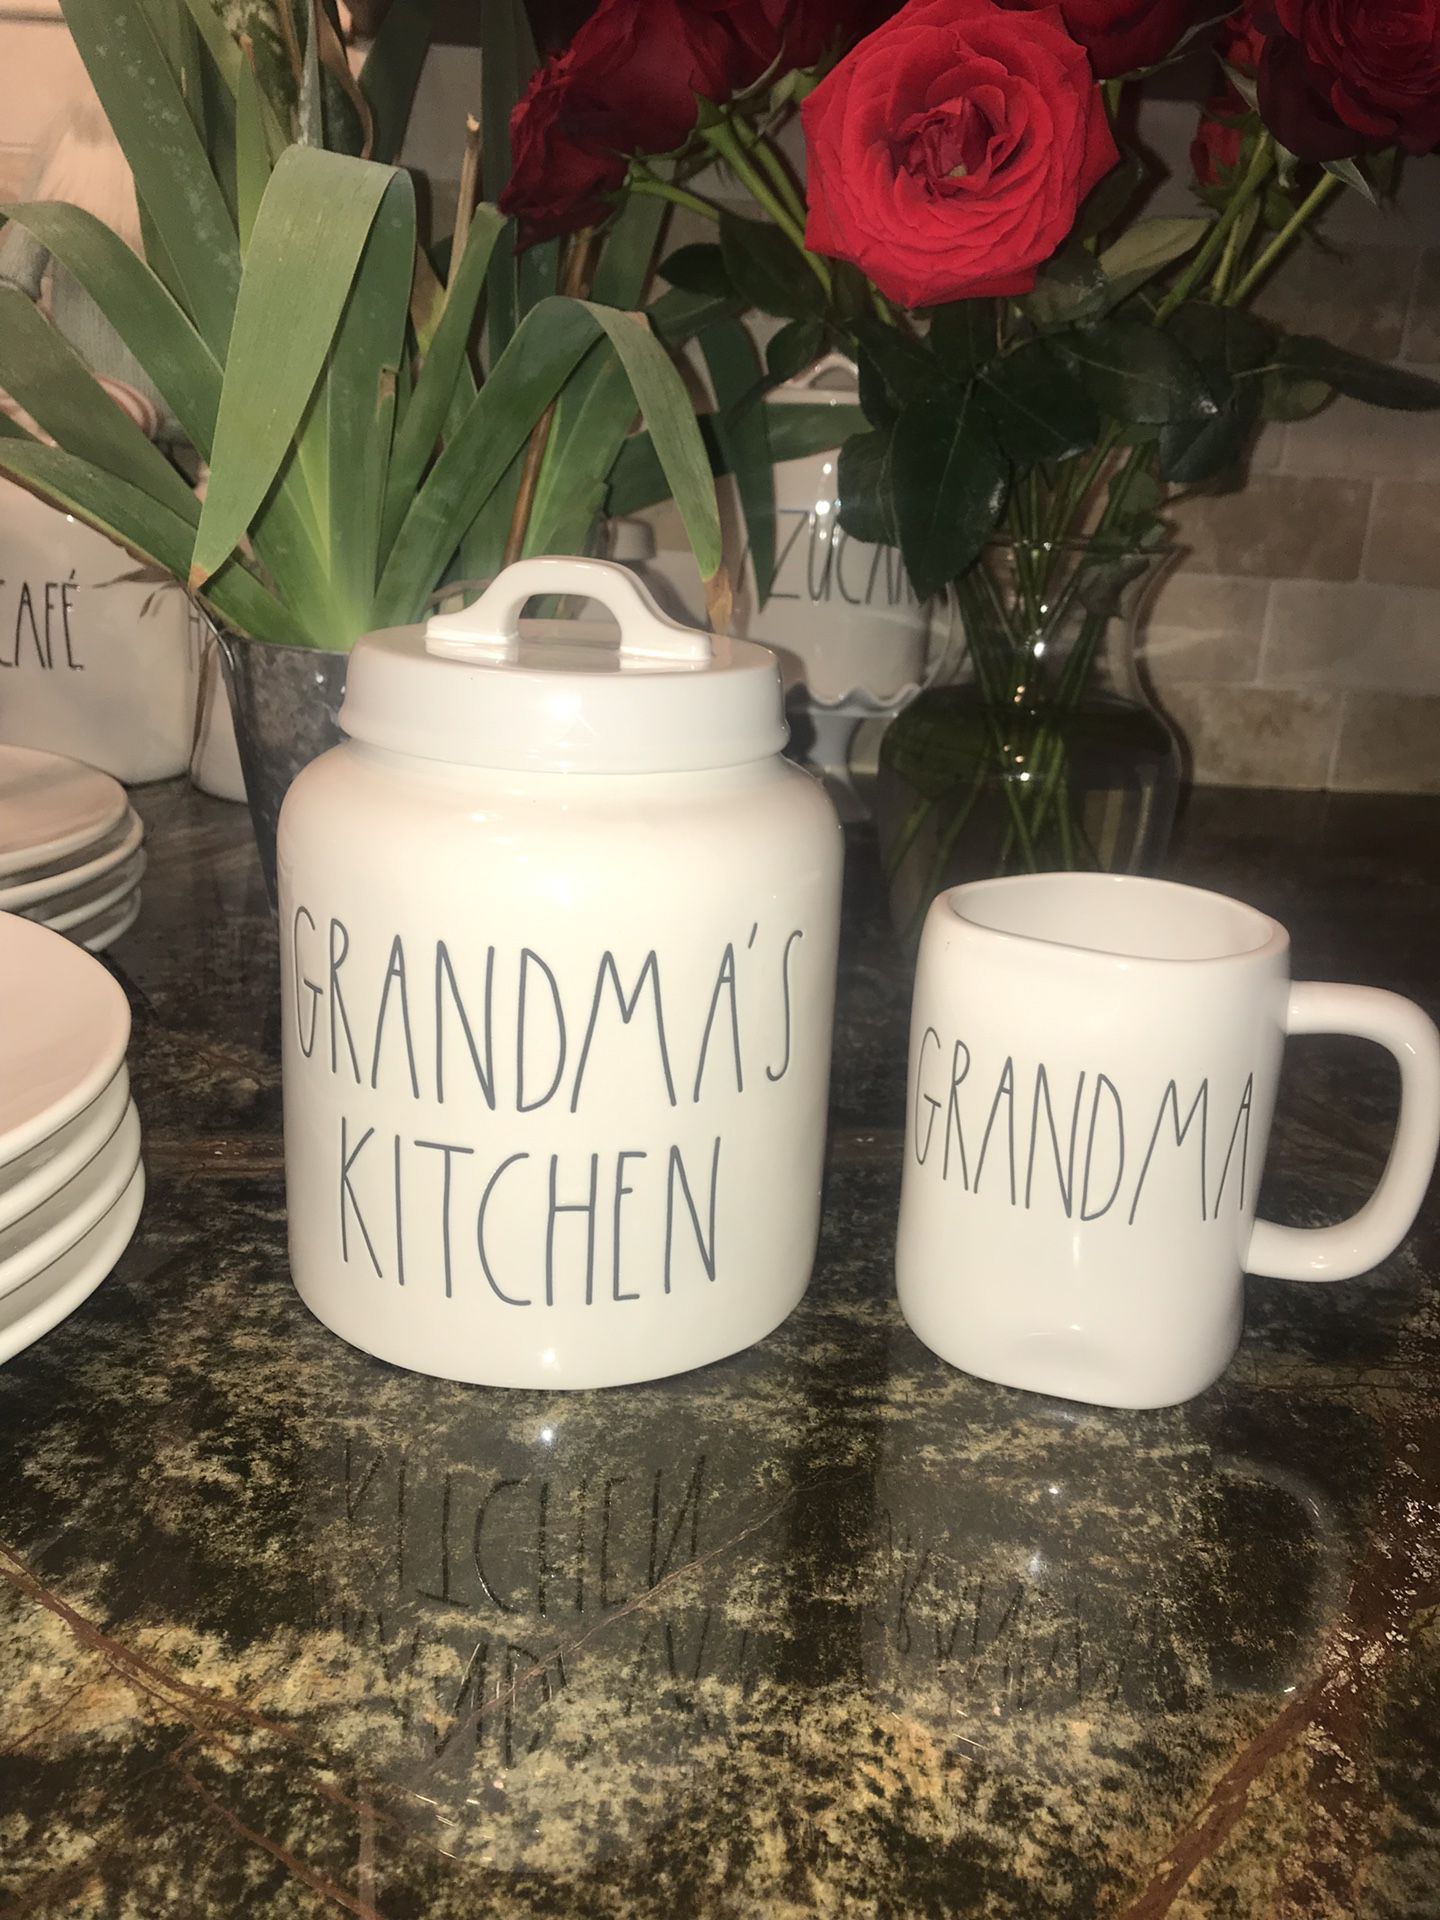 Rae Dunn Grandma’s Kitchen Set - Adorable!